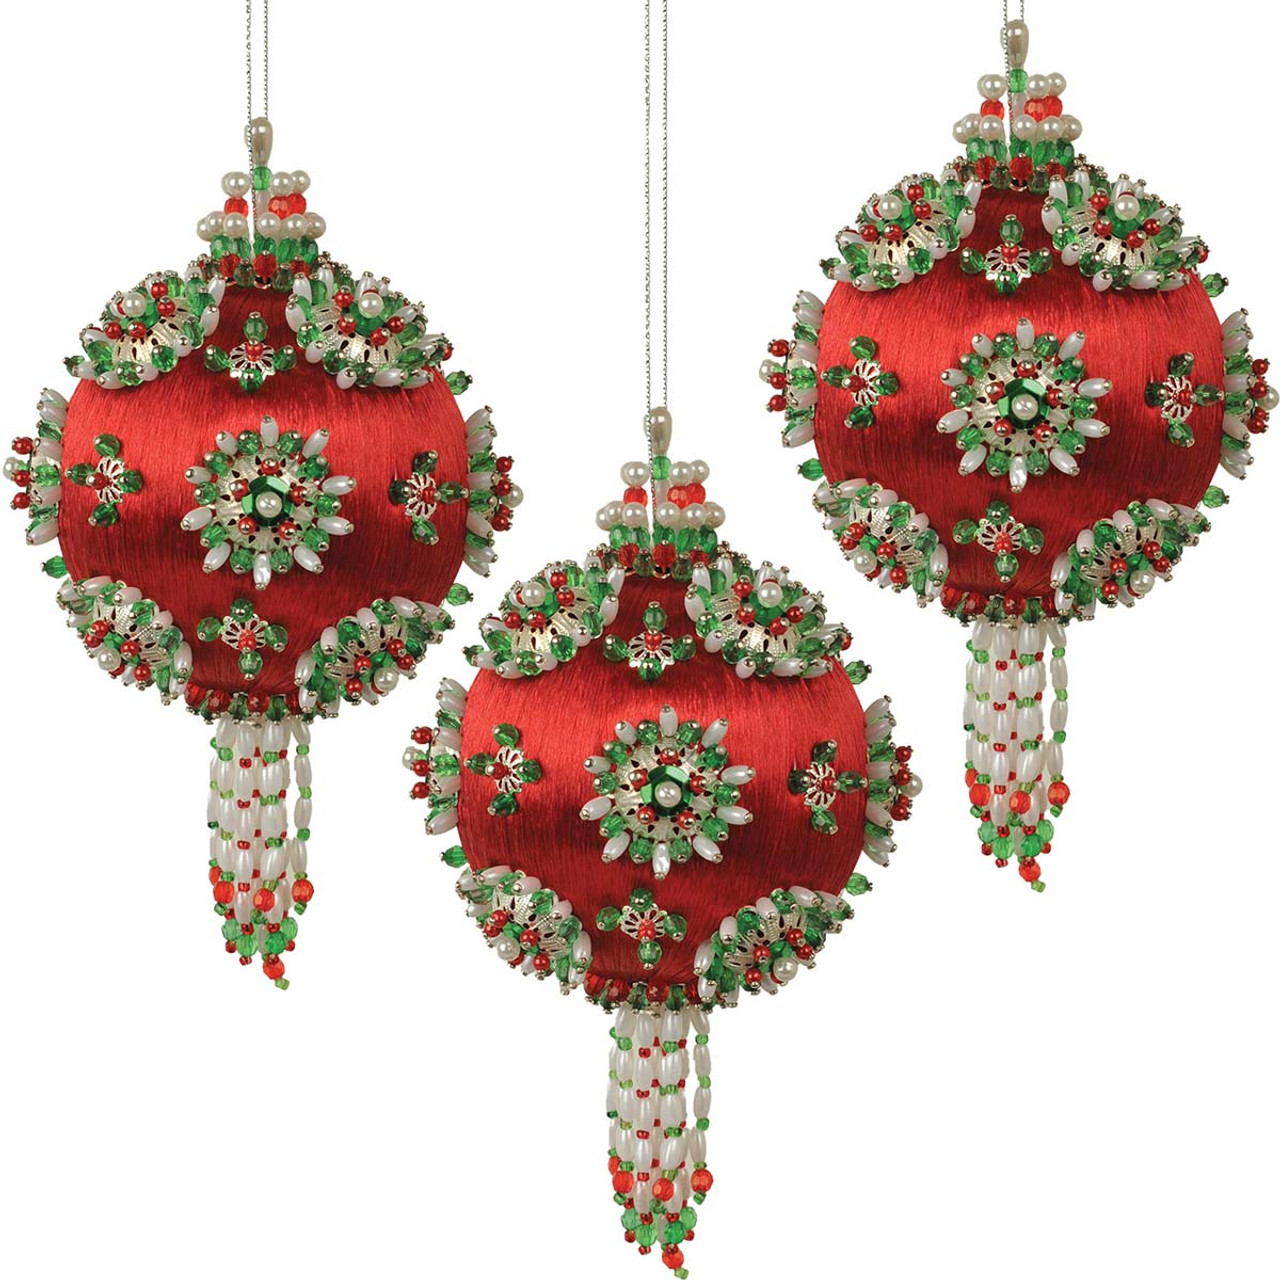 Herrschners - Seasonal - Christmas - Ornaments - Felt - Herrschners